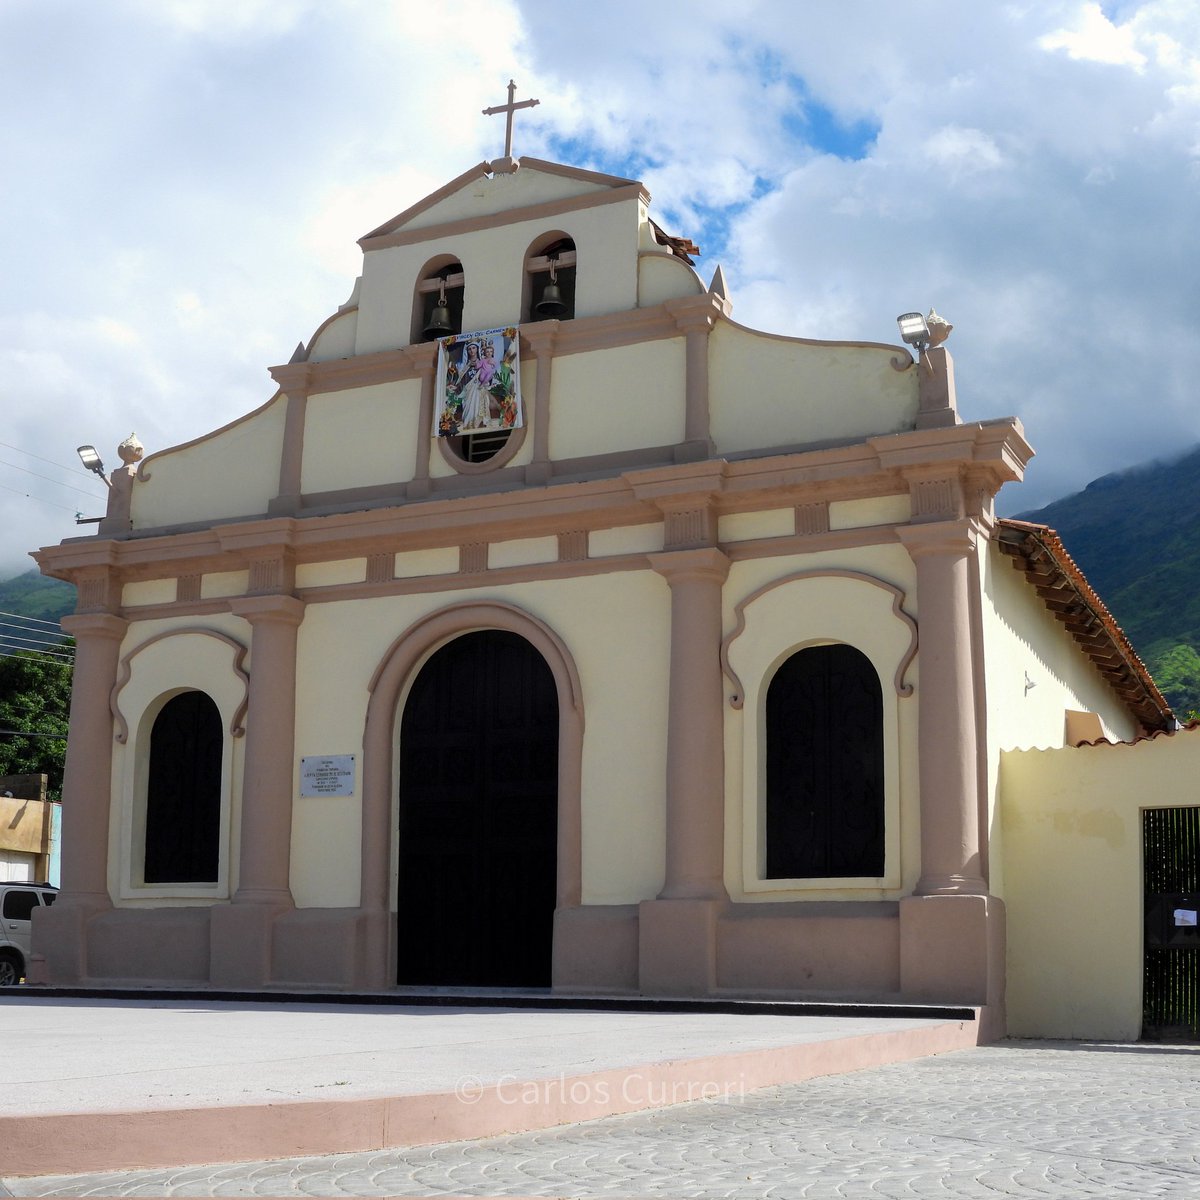 #iglesia Nuestra Señora del Carmen de #mariara estado #carabobo #venezuela. Año 1924. Arquidiócesis de #valencia #travelblogger #architecture #templo